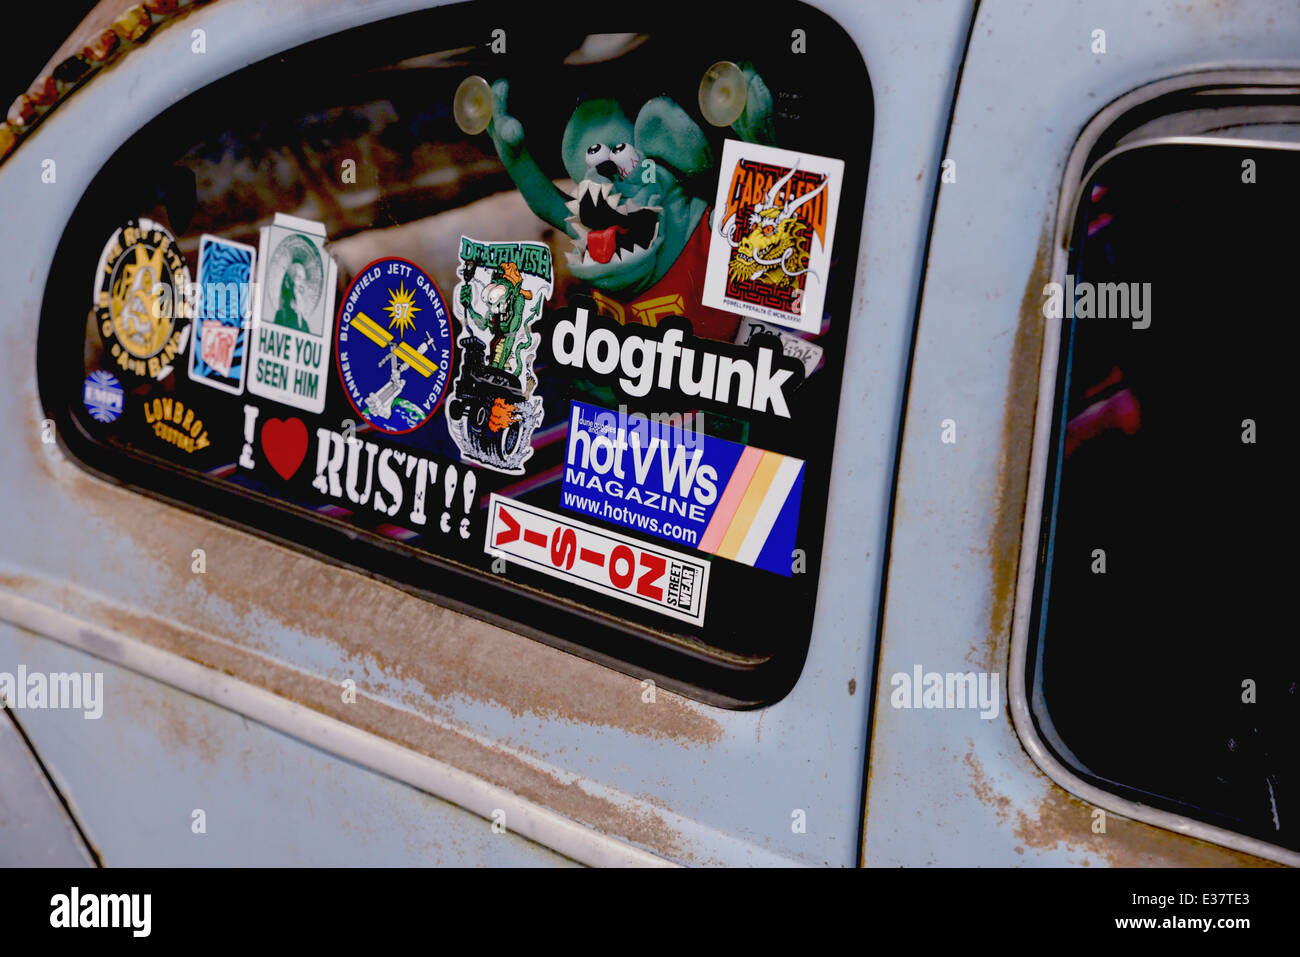 Manche Führen, Manche Folgen. Sticker or decal on car rear window Stock  Photo - Alamy